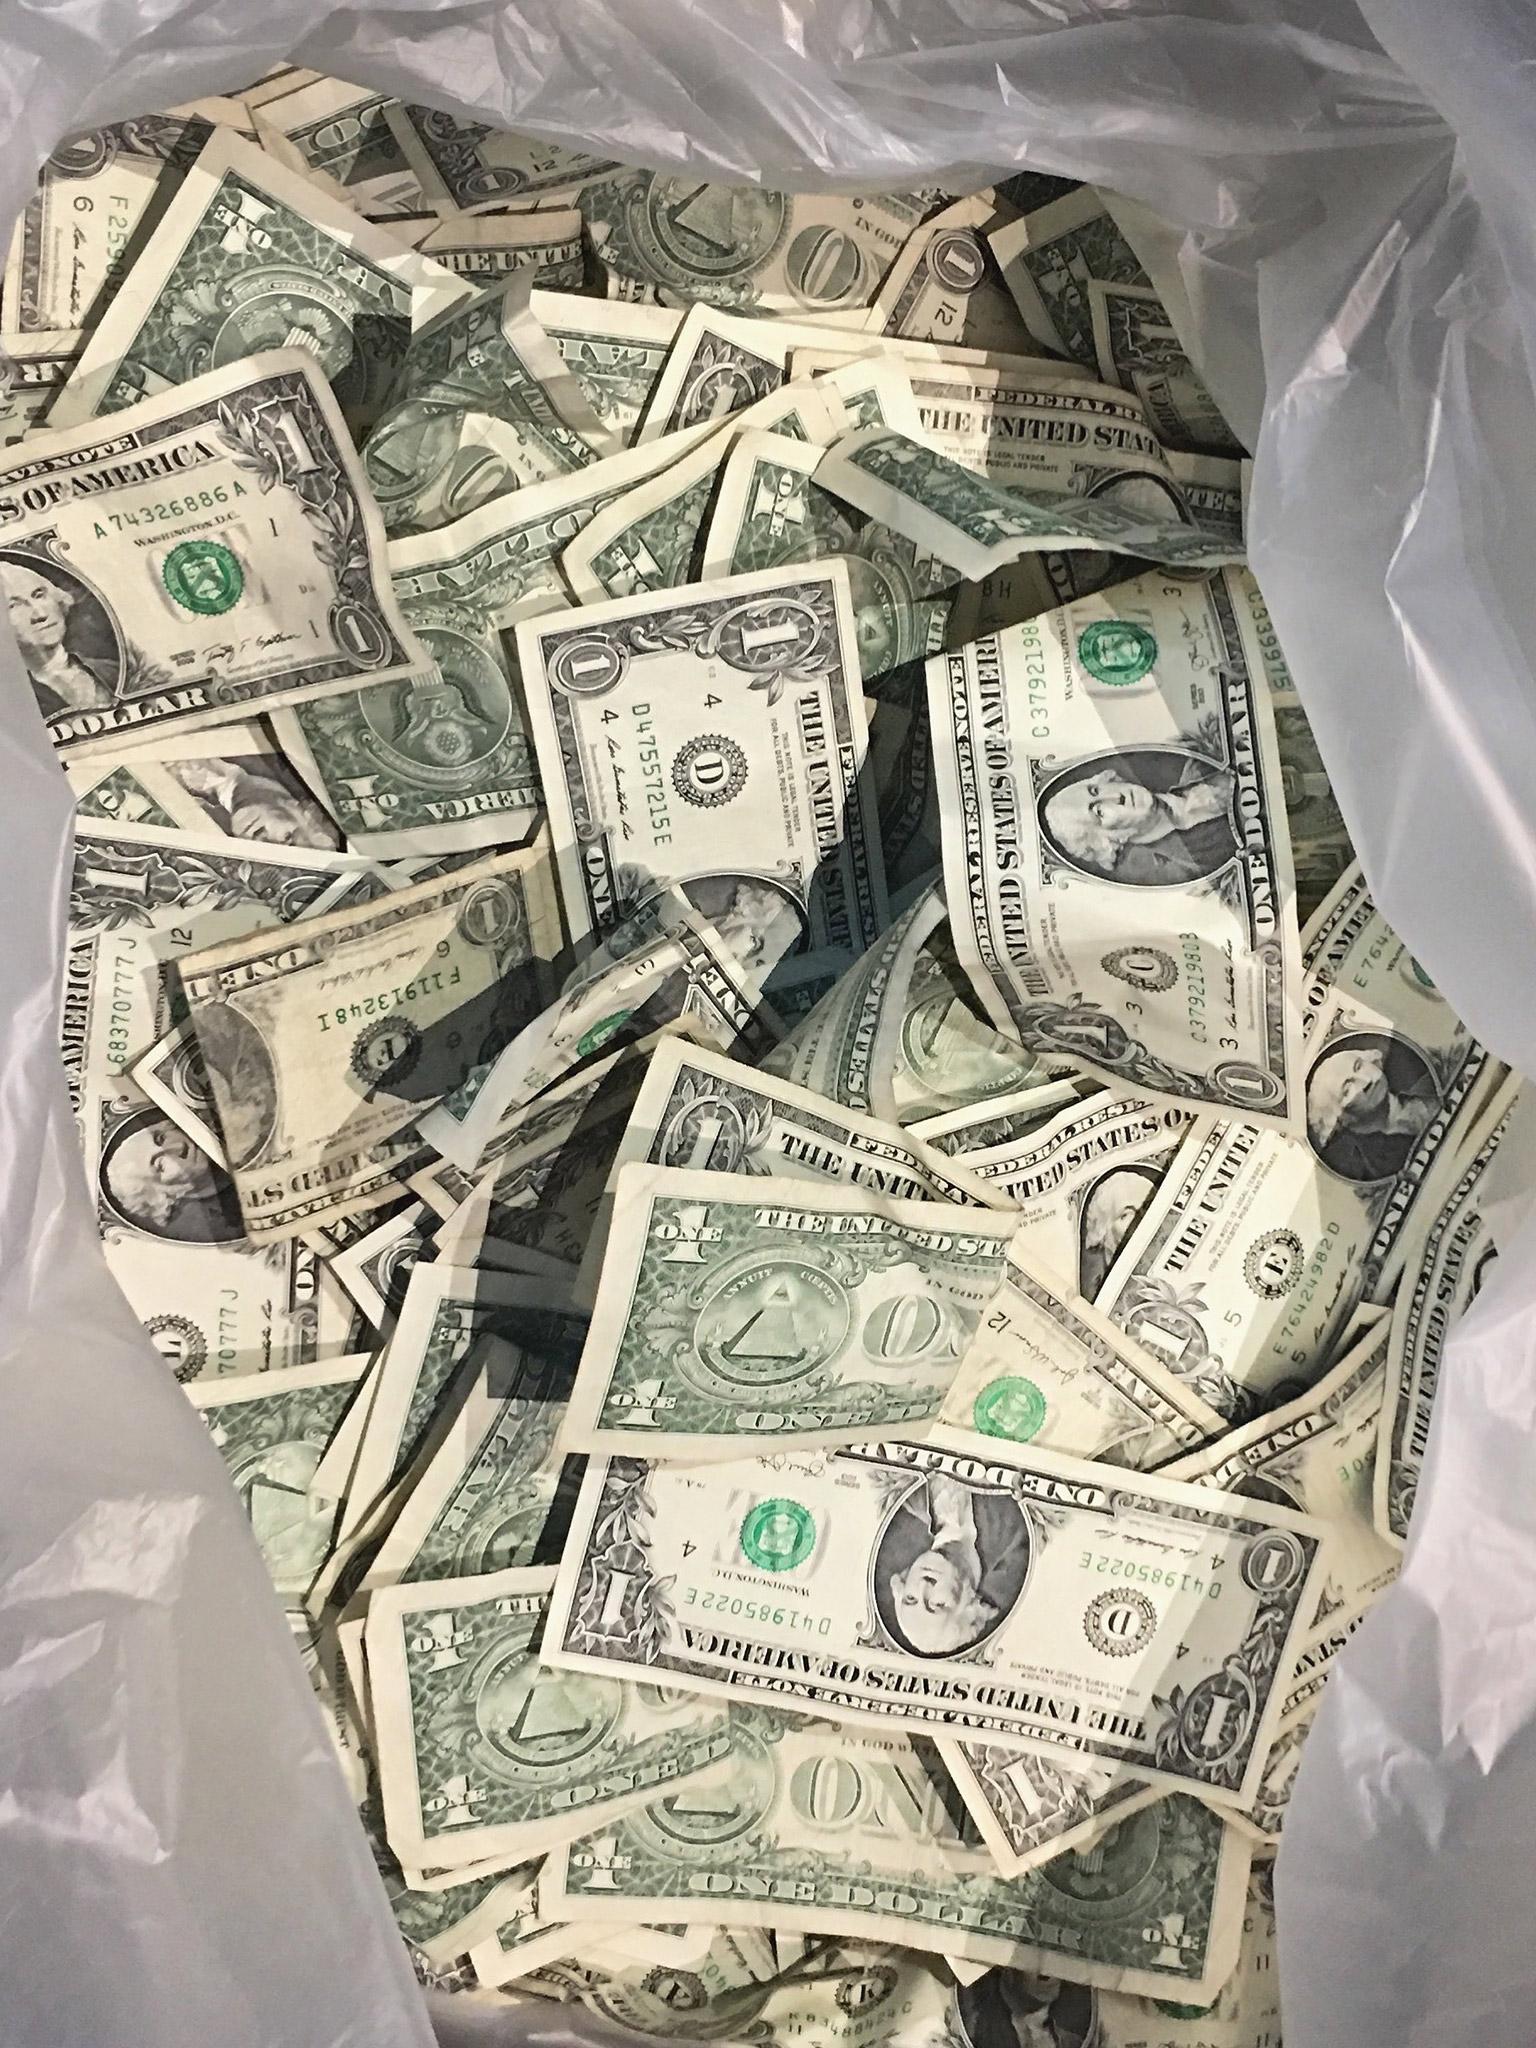 Stripper Cash - Real stripper money pictures - Excellent porn